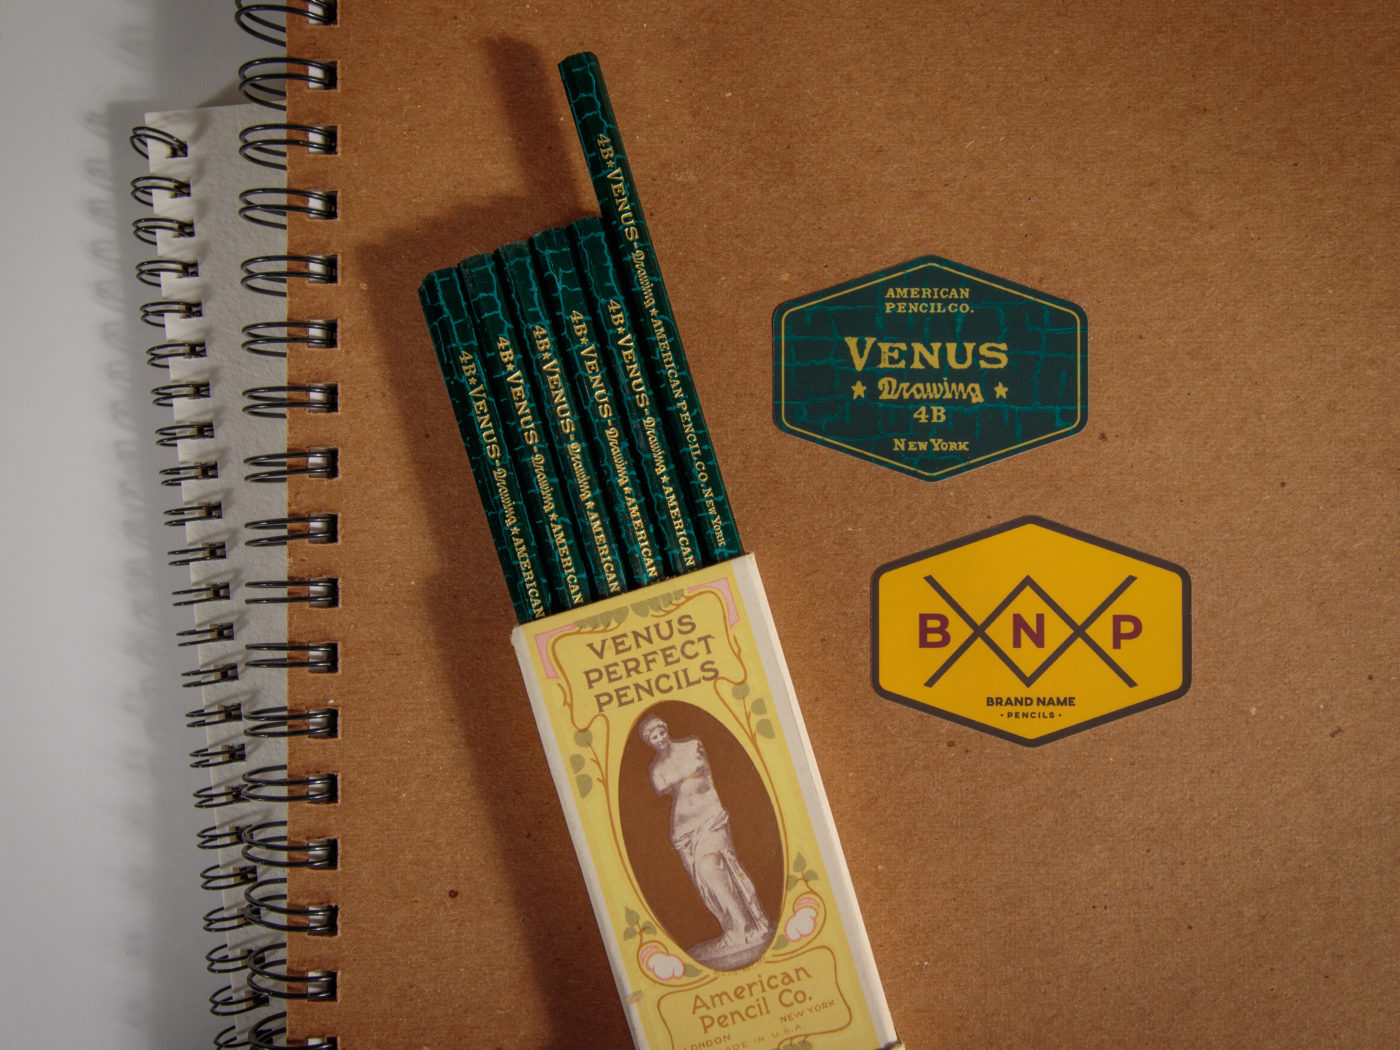 Venus antique drawing pencils